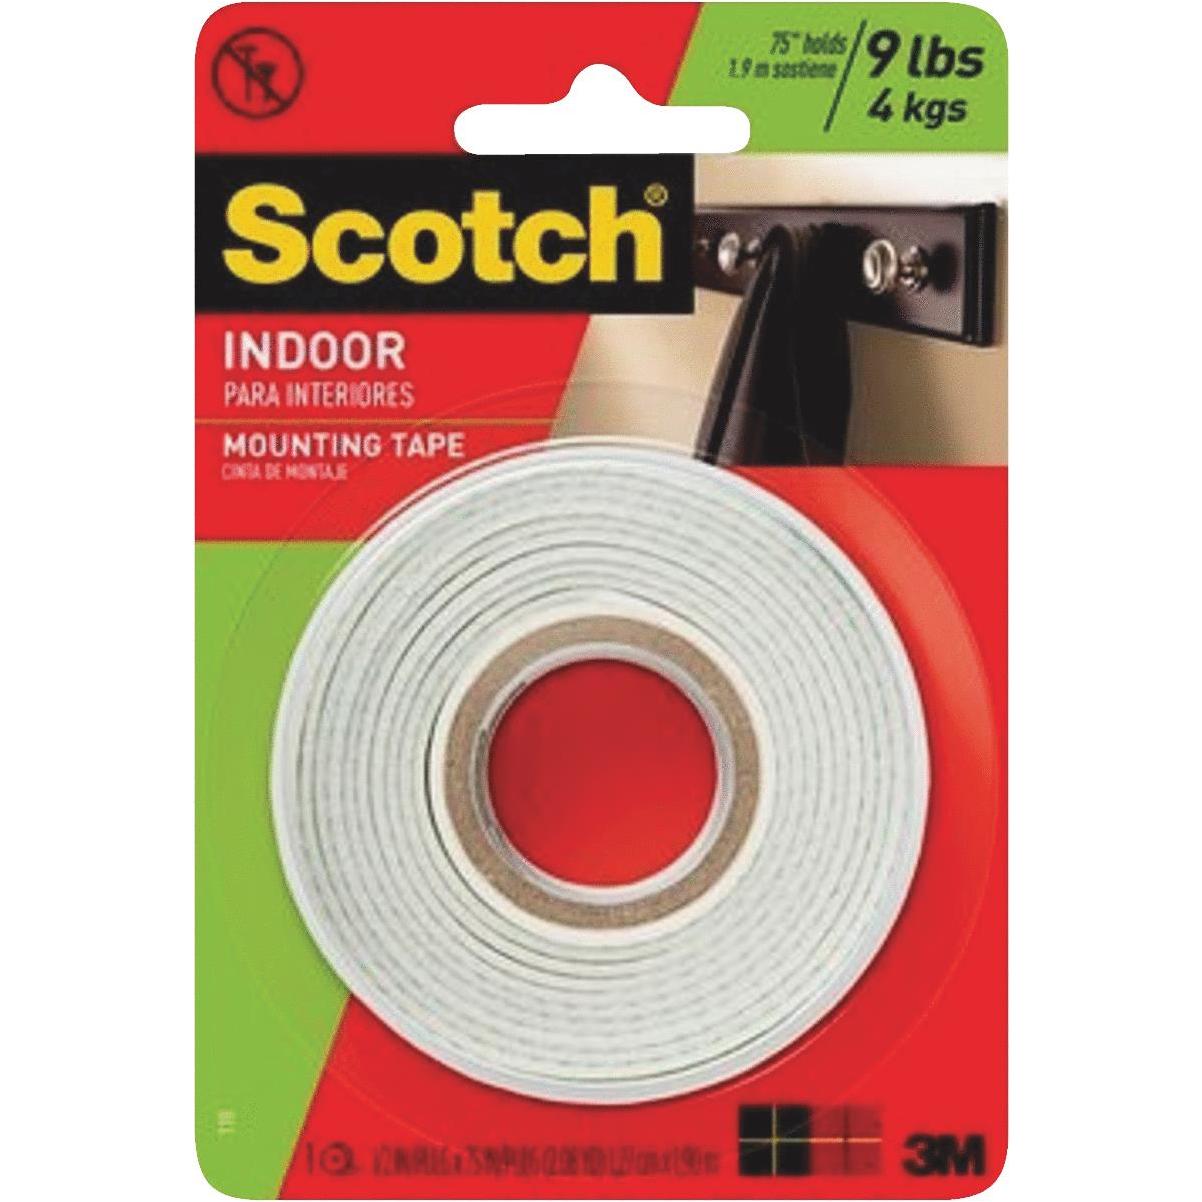 Scotch-brite Scotch Removable Poster Tape - MMM110 